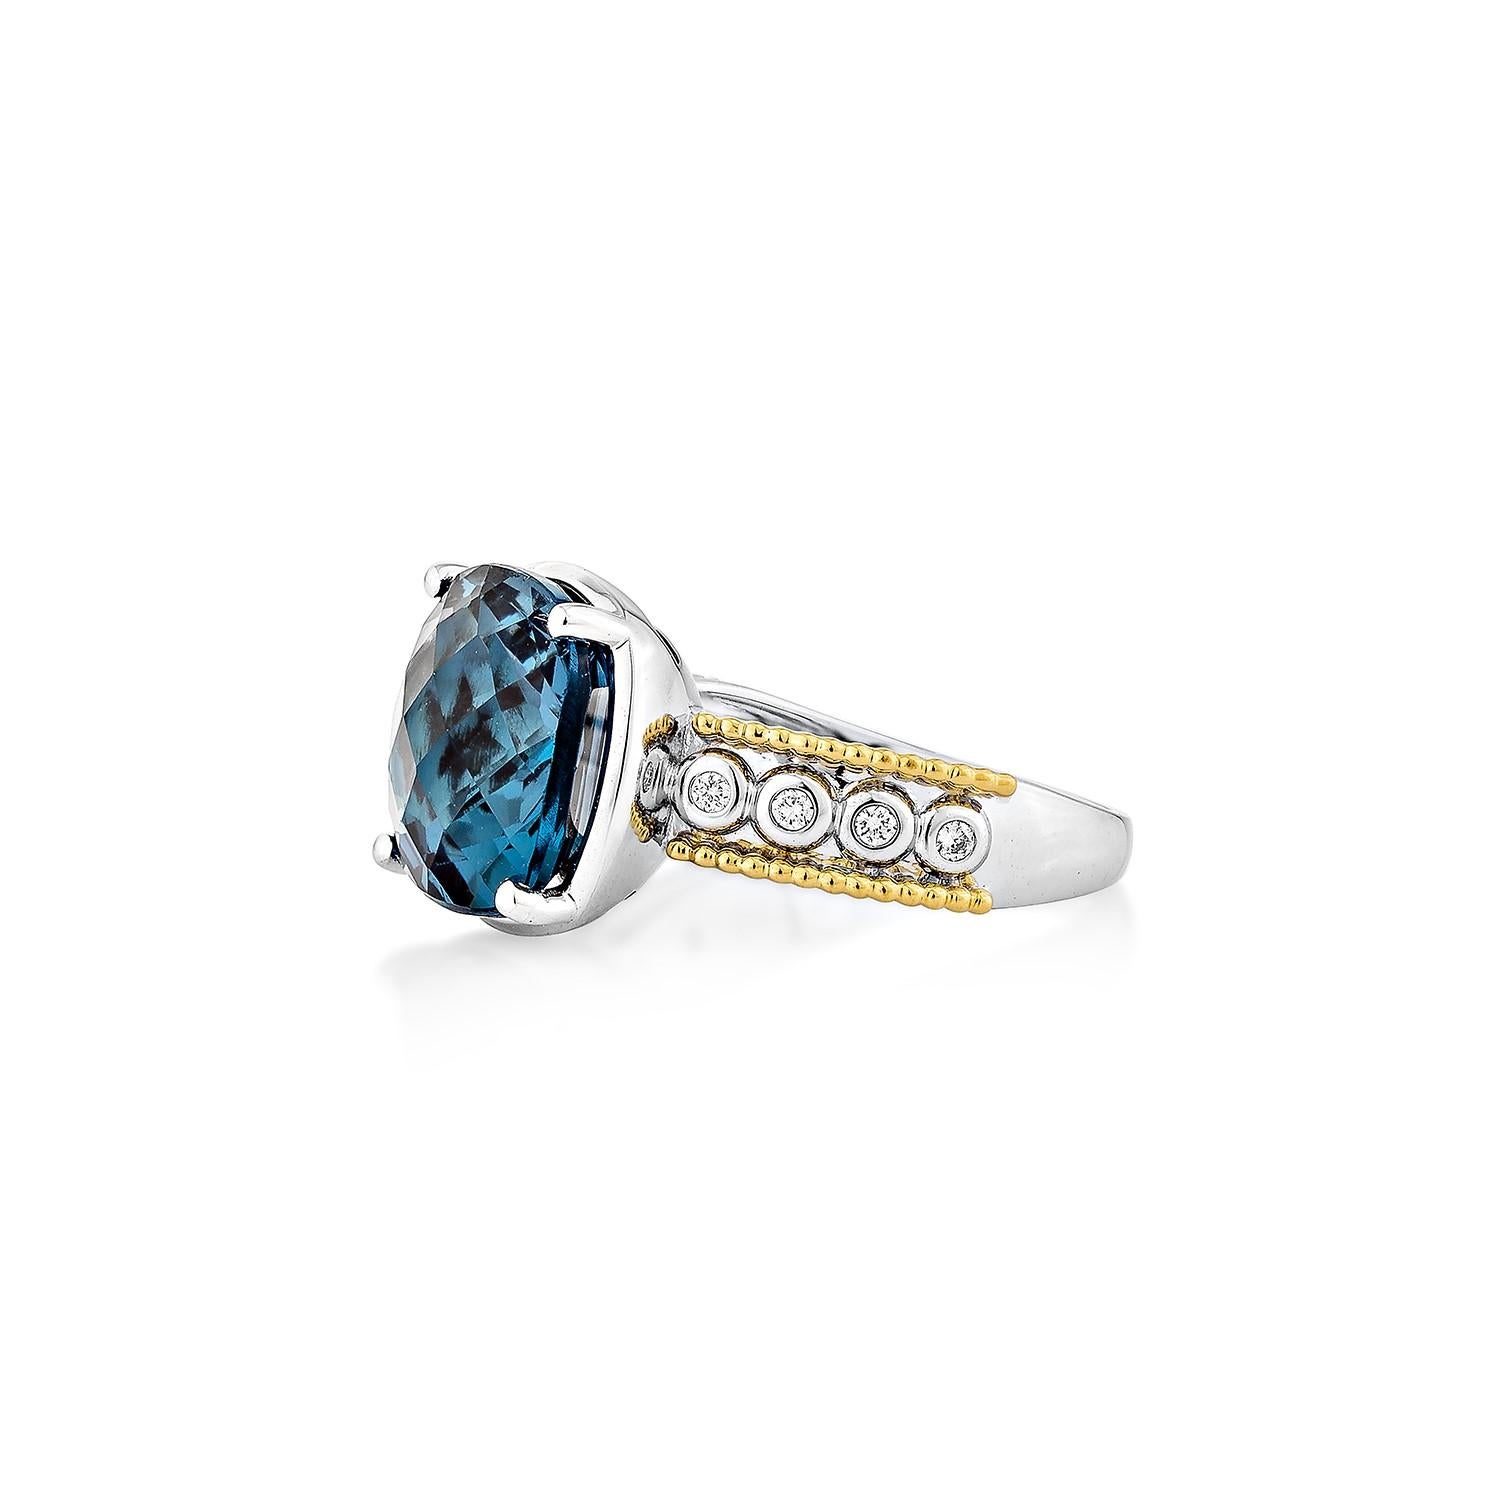 Cushion Cut 8.12 Carat London Blue Topaz Fancy Ring in 18KWYG with White Diamond. For Sale